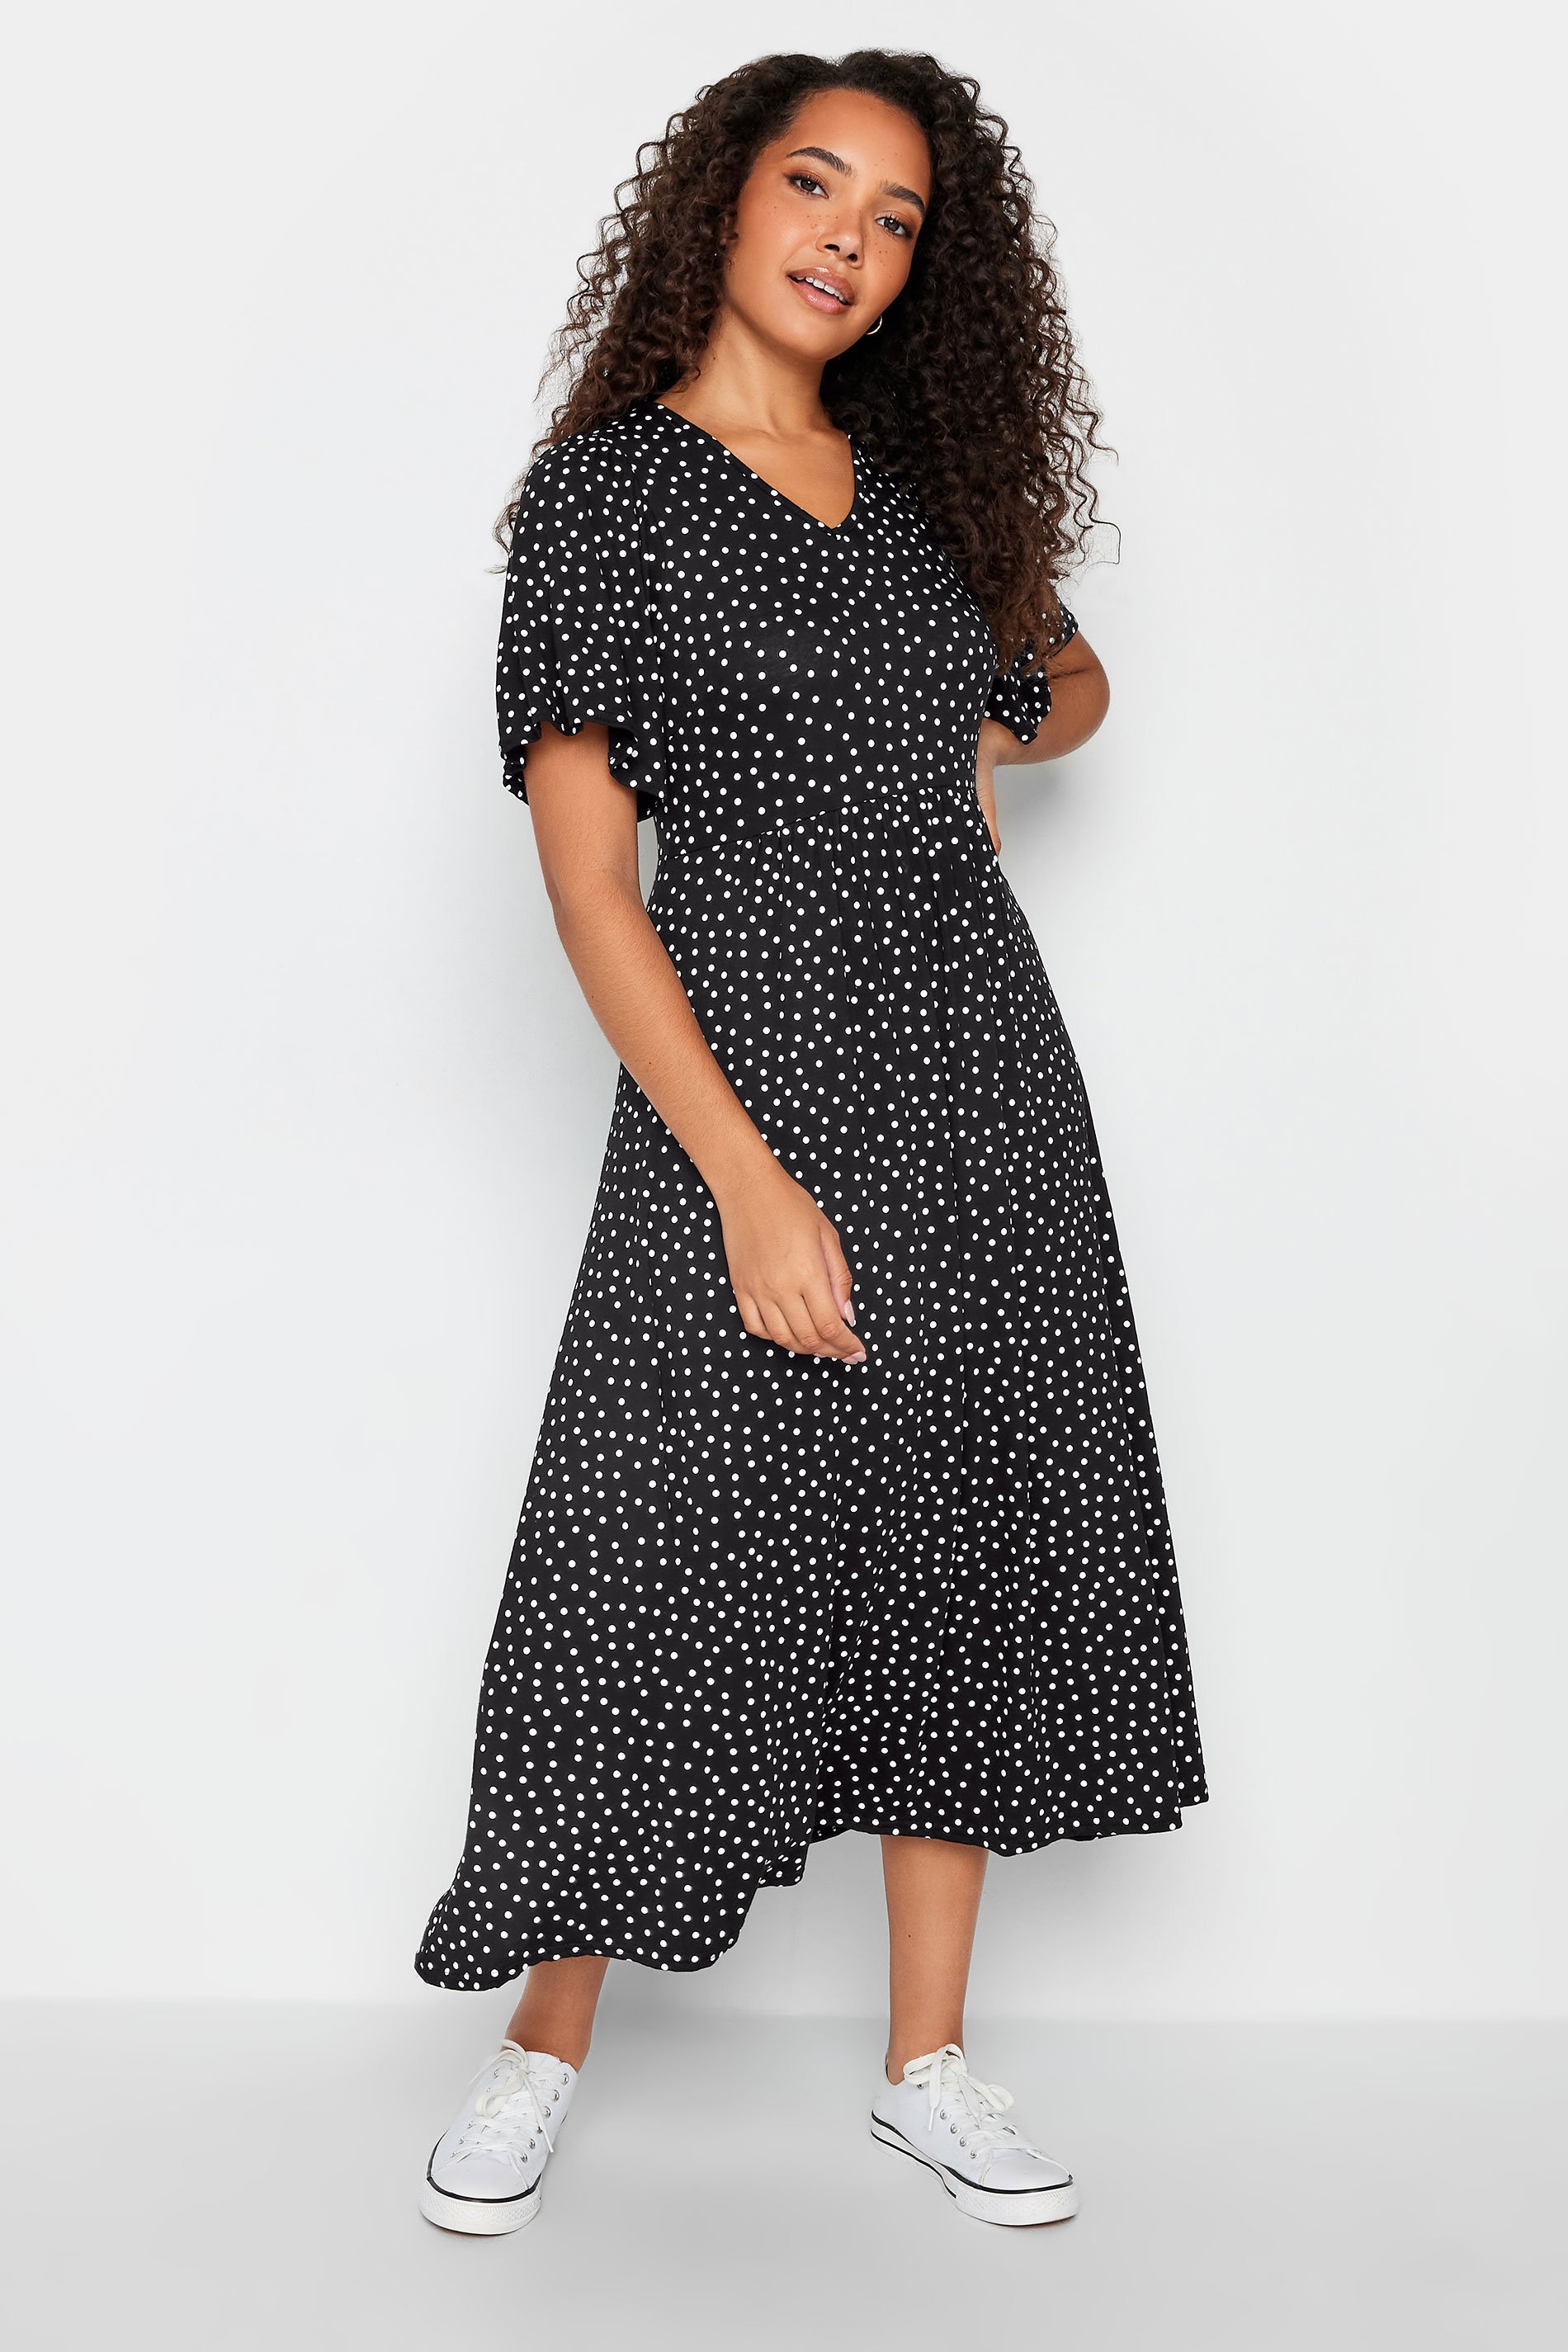 M&Co Black Polka Dot Maxi Dress | M&Co 1